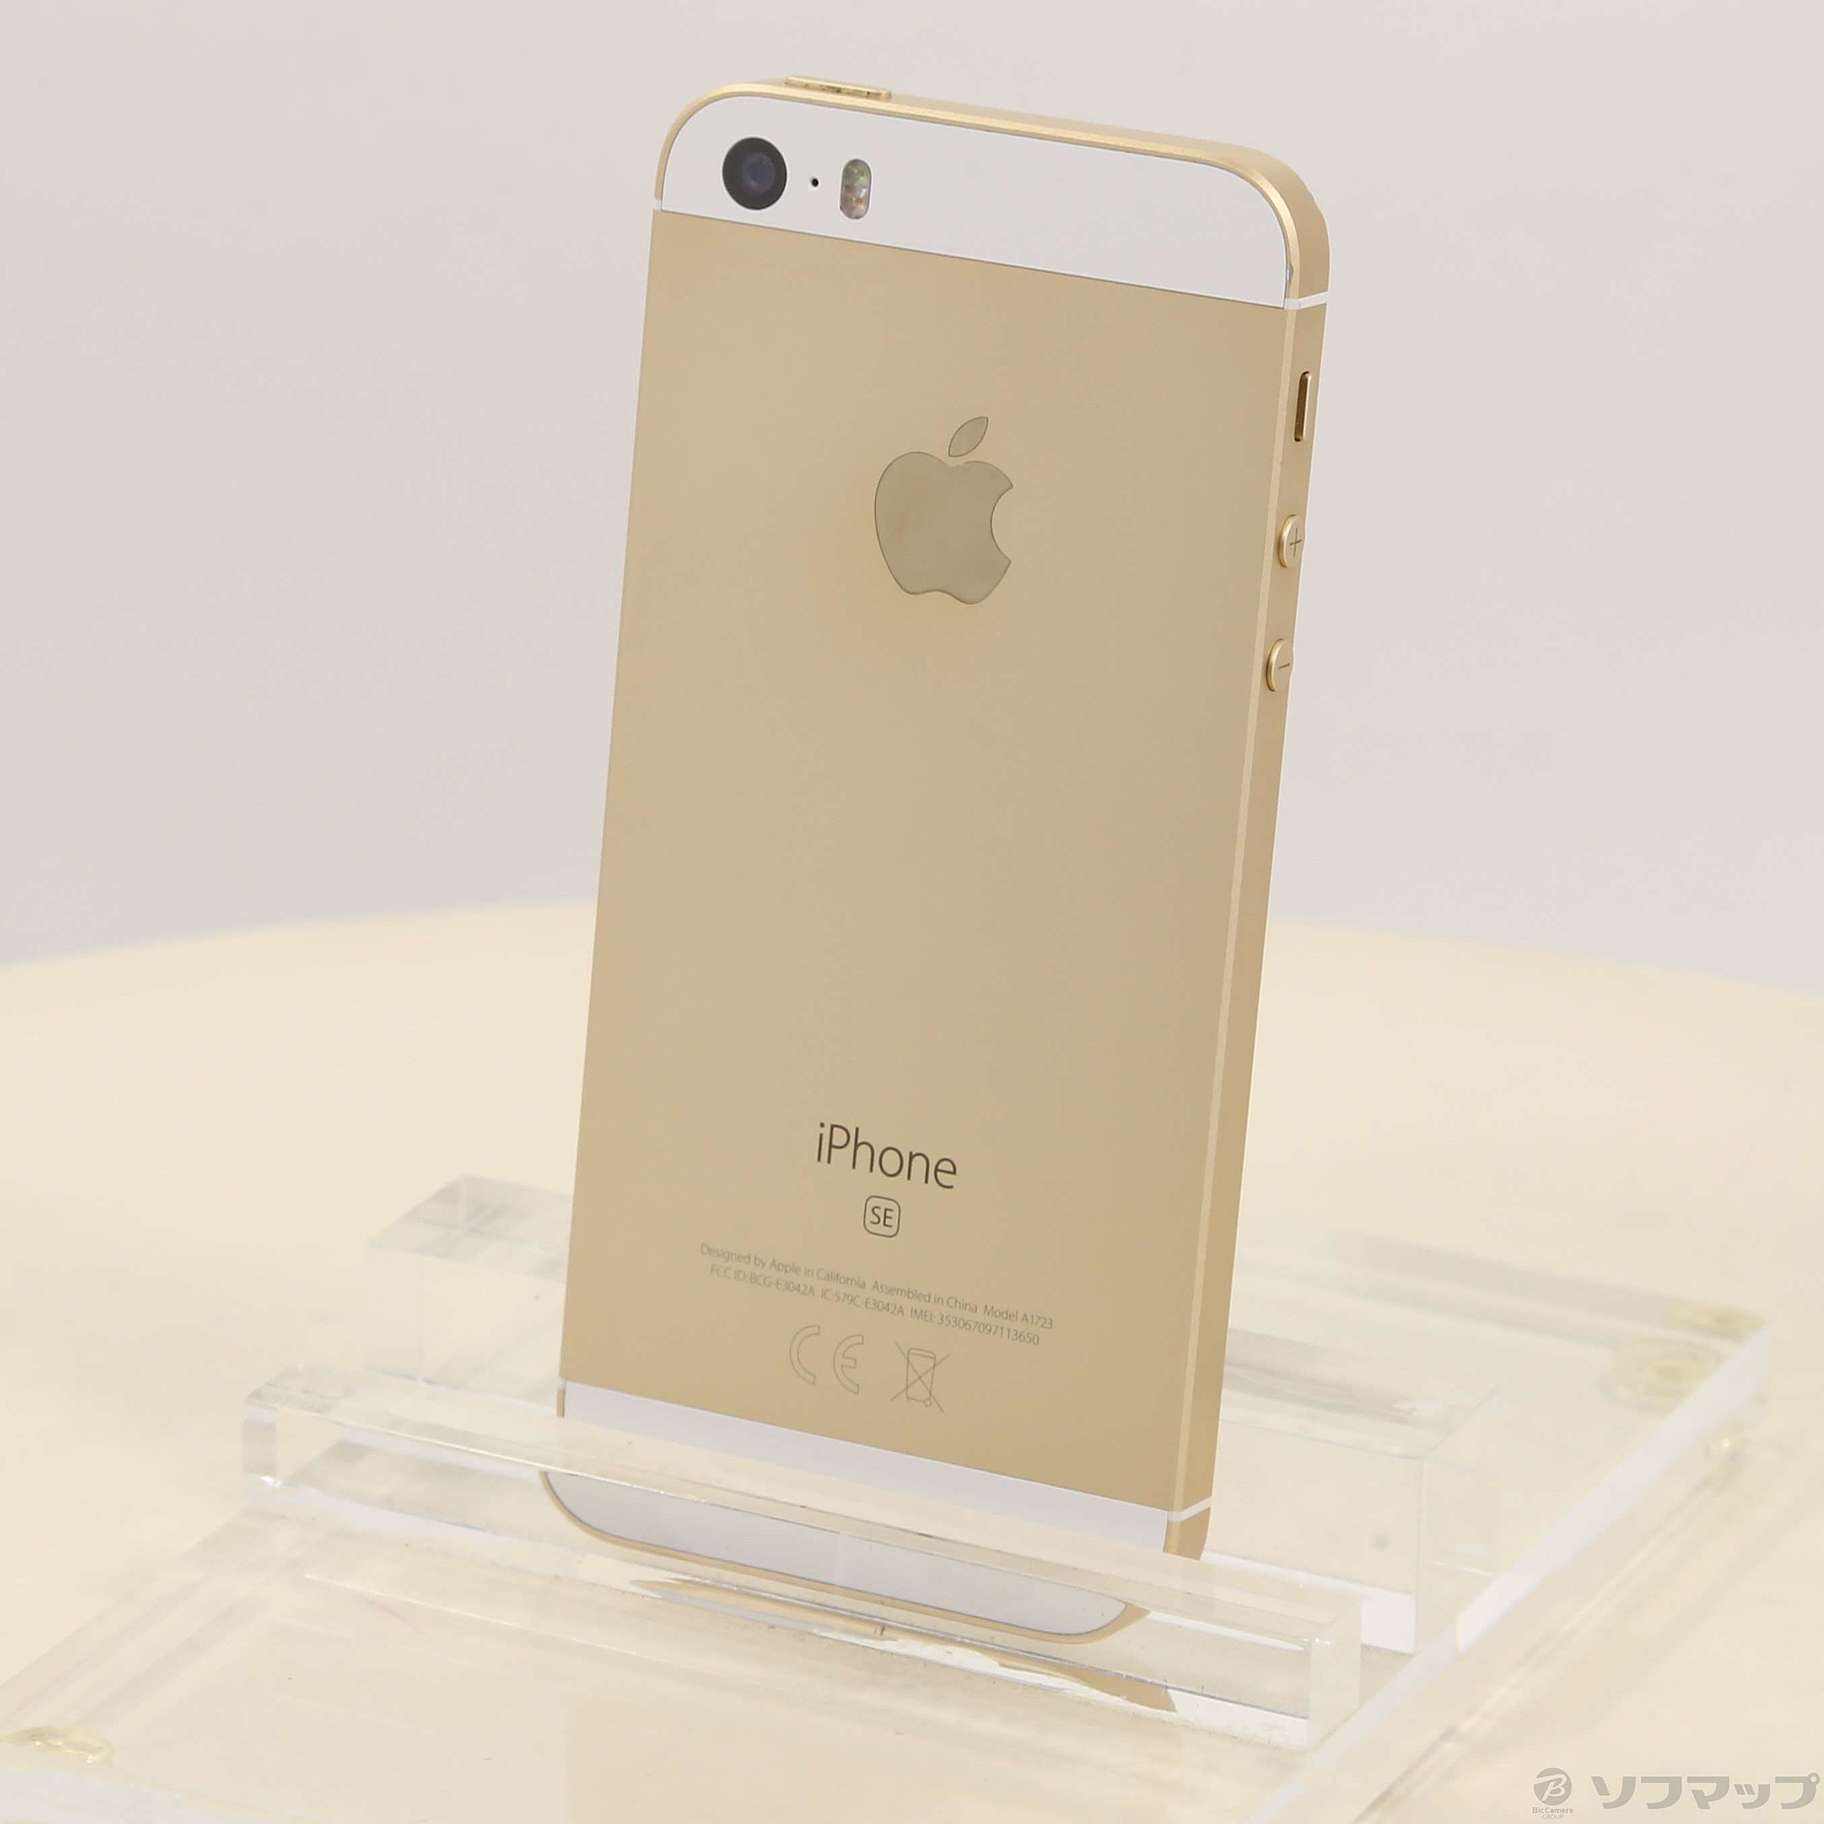 iPhone SE Gold 32 GB SIMフリー